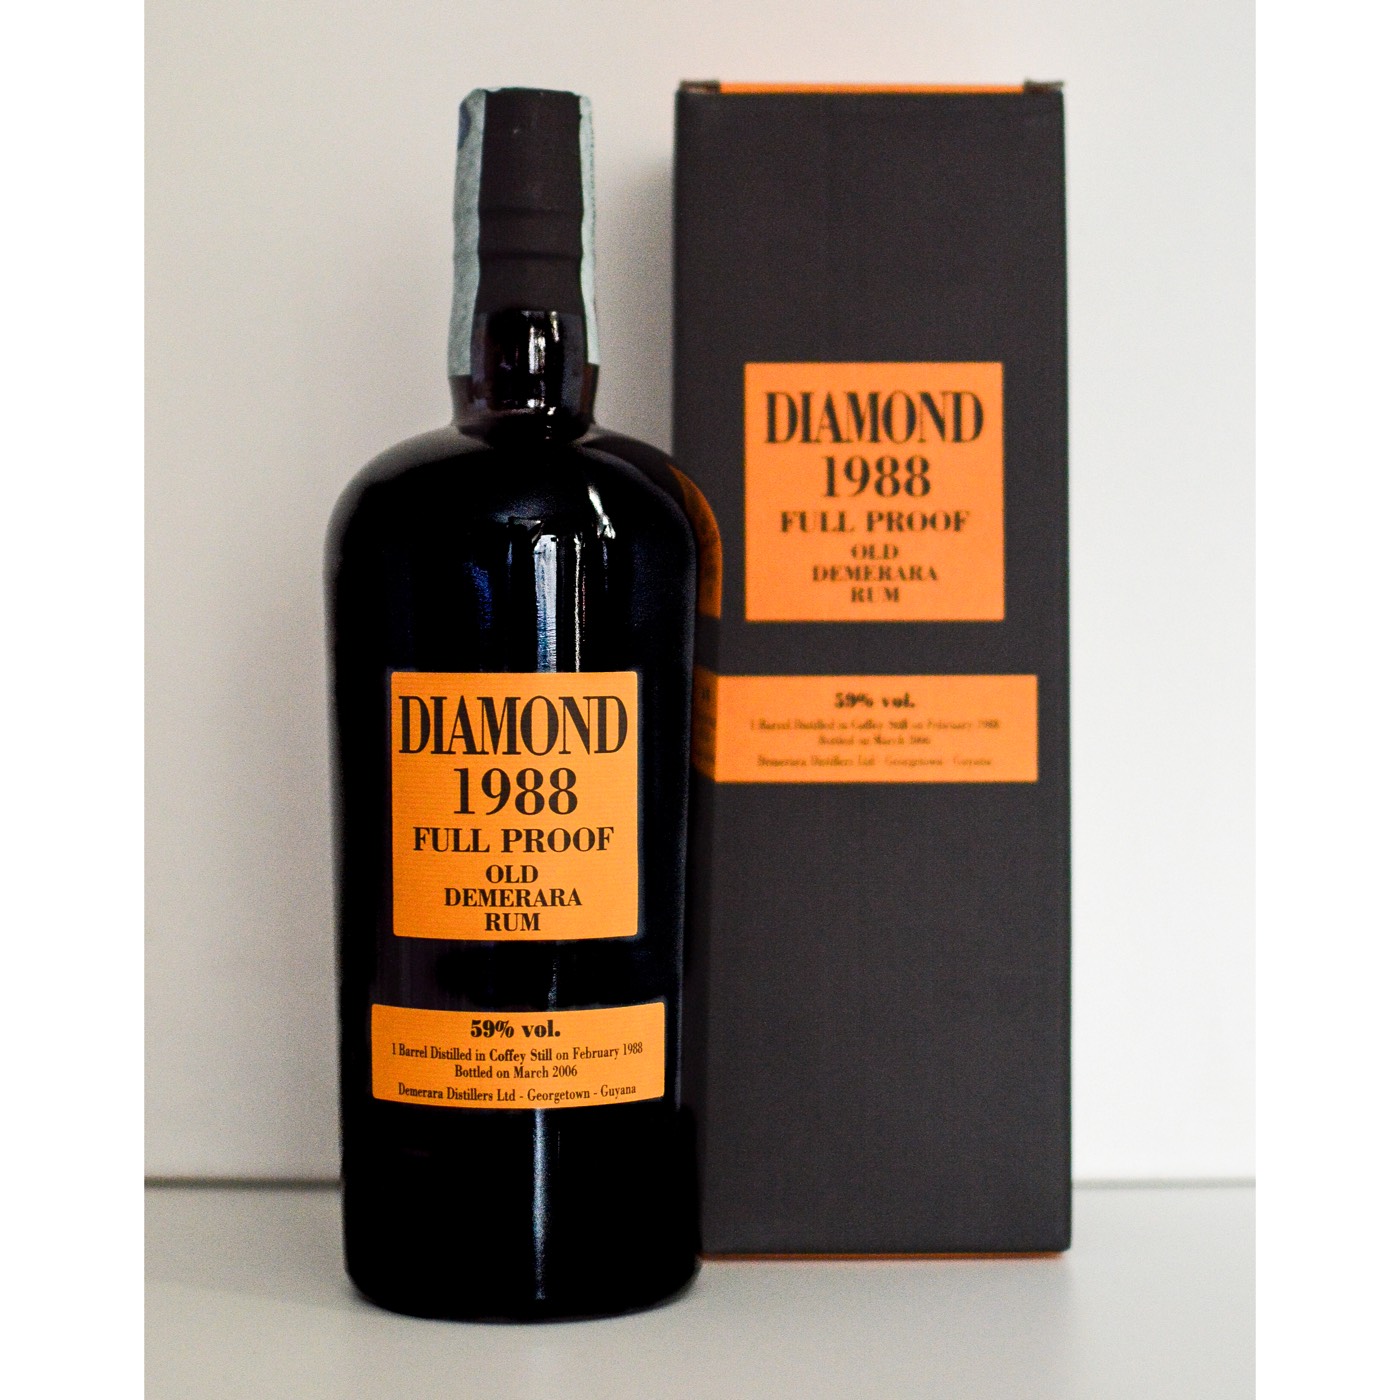 Bottle image of Old Demerara Rum